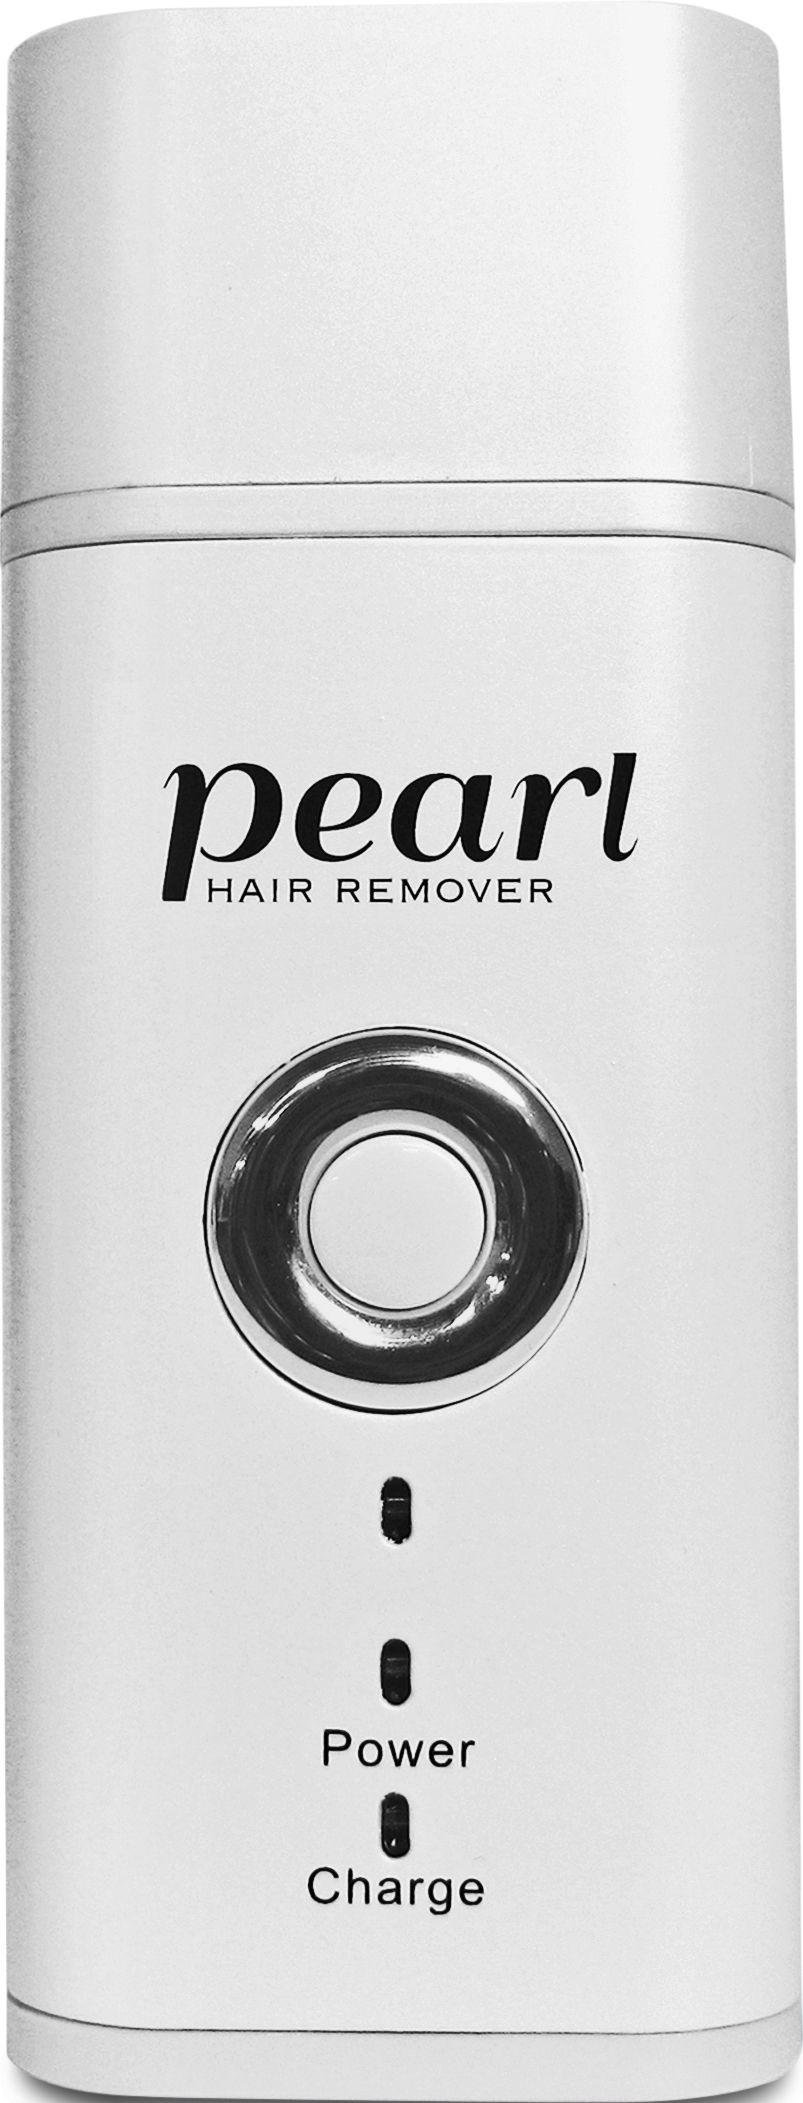 JML Pearl Hair Remover. Review